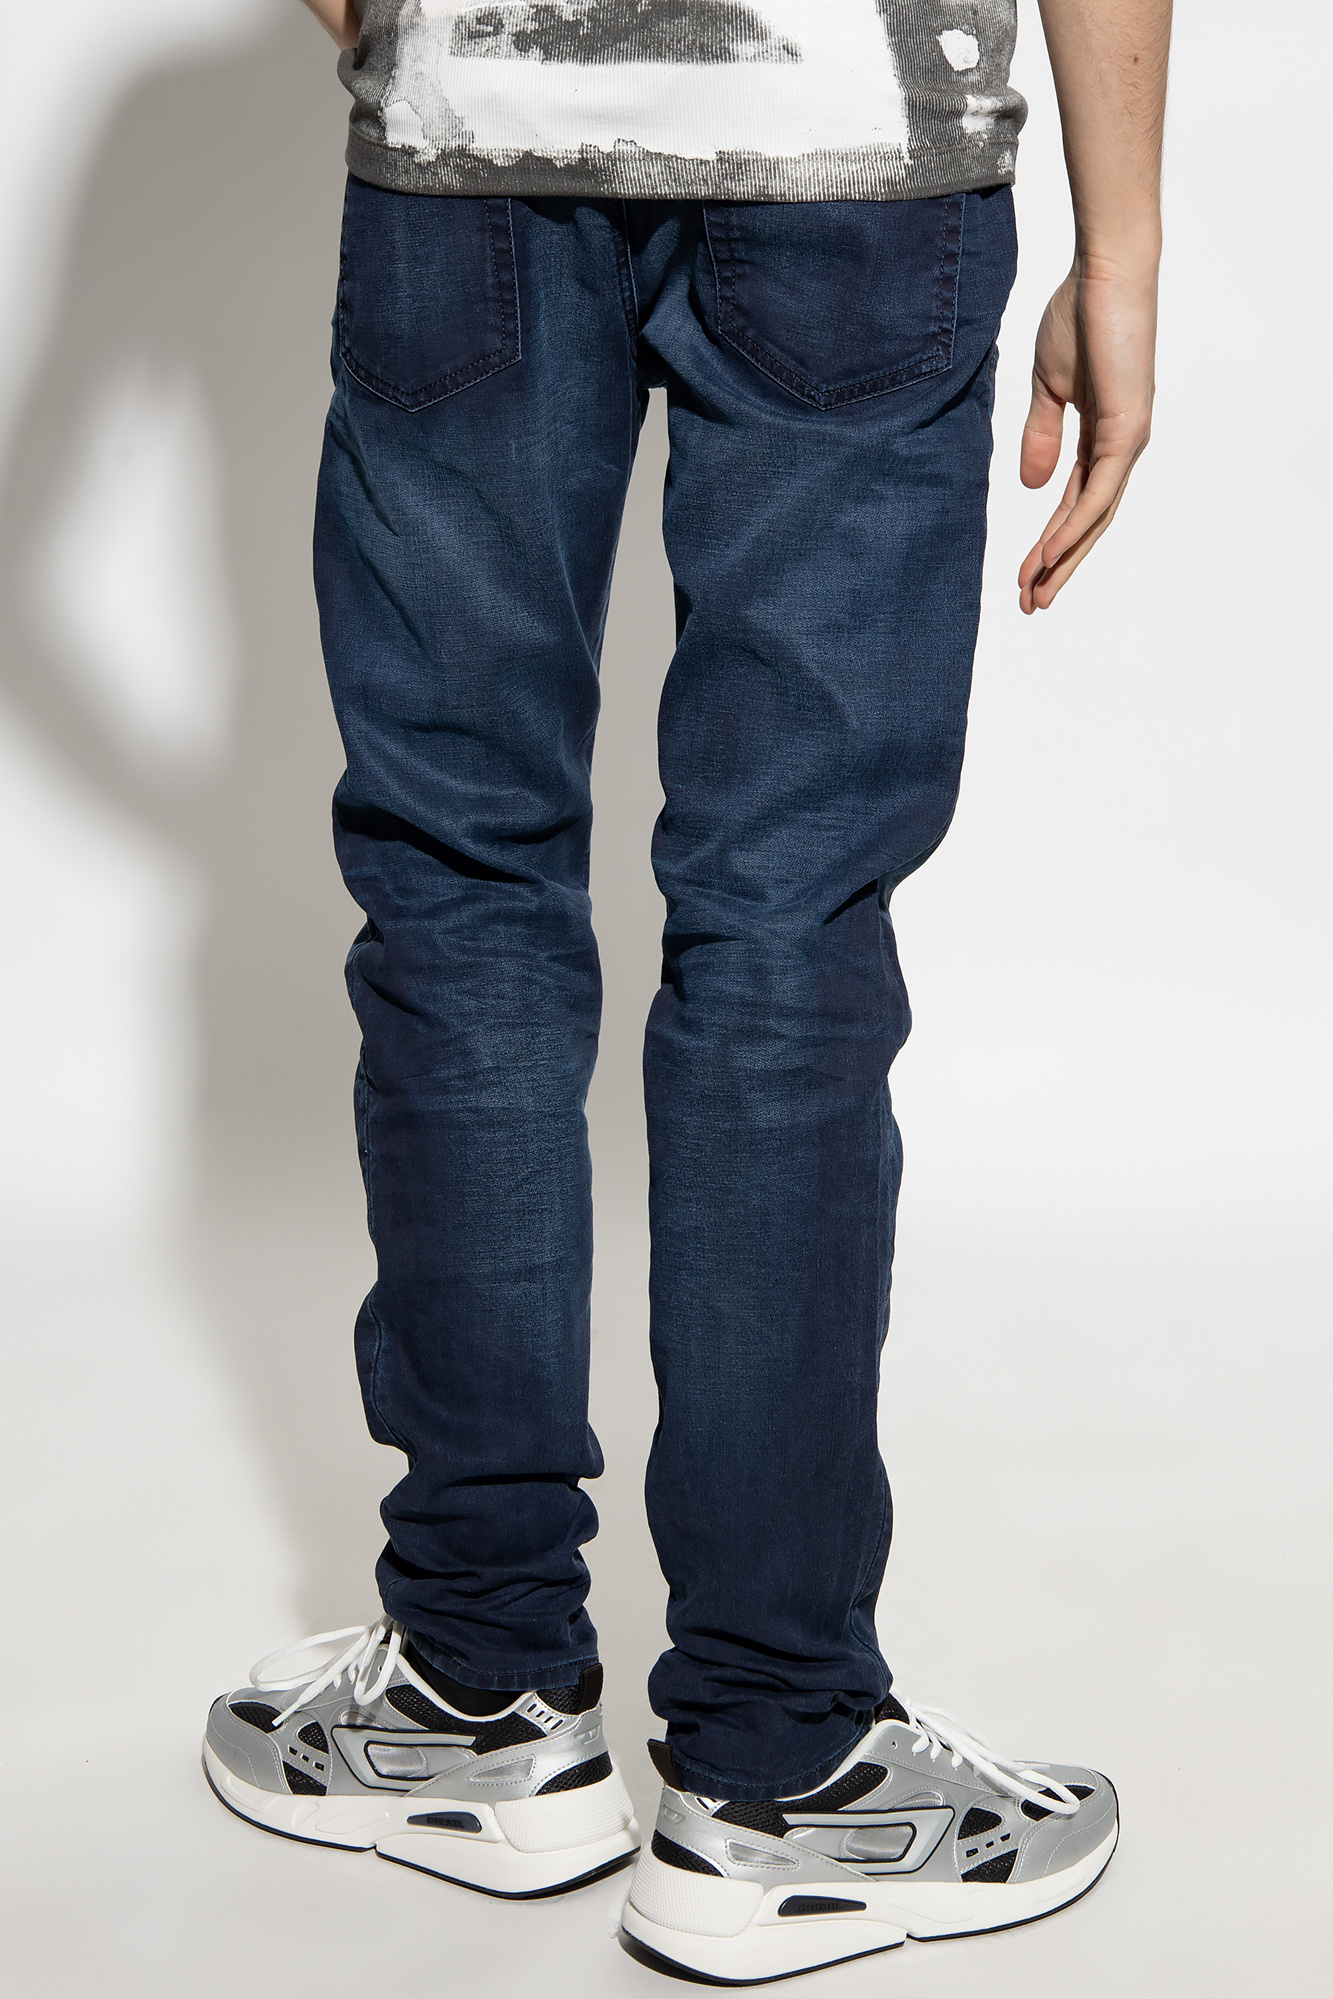 Diesel ‘D-STRUKT JOGG’ jeans | Men's Clothing | Vitkac